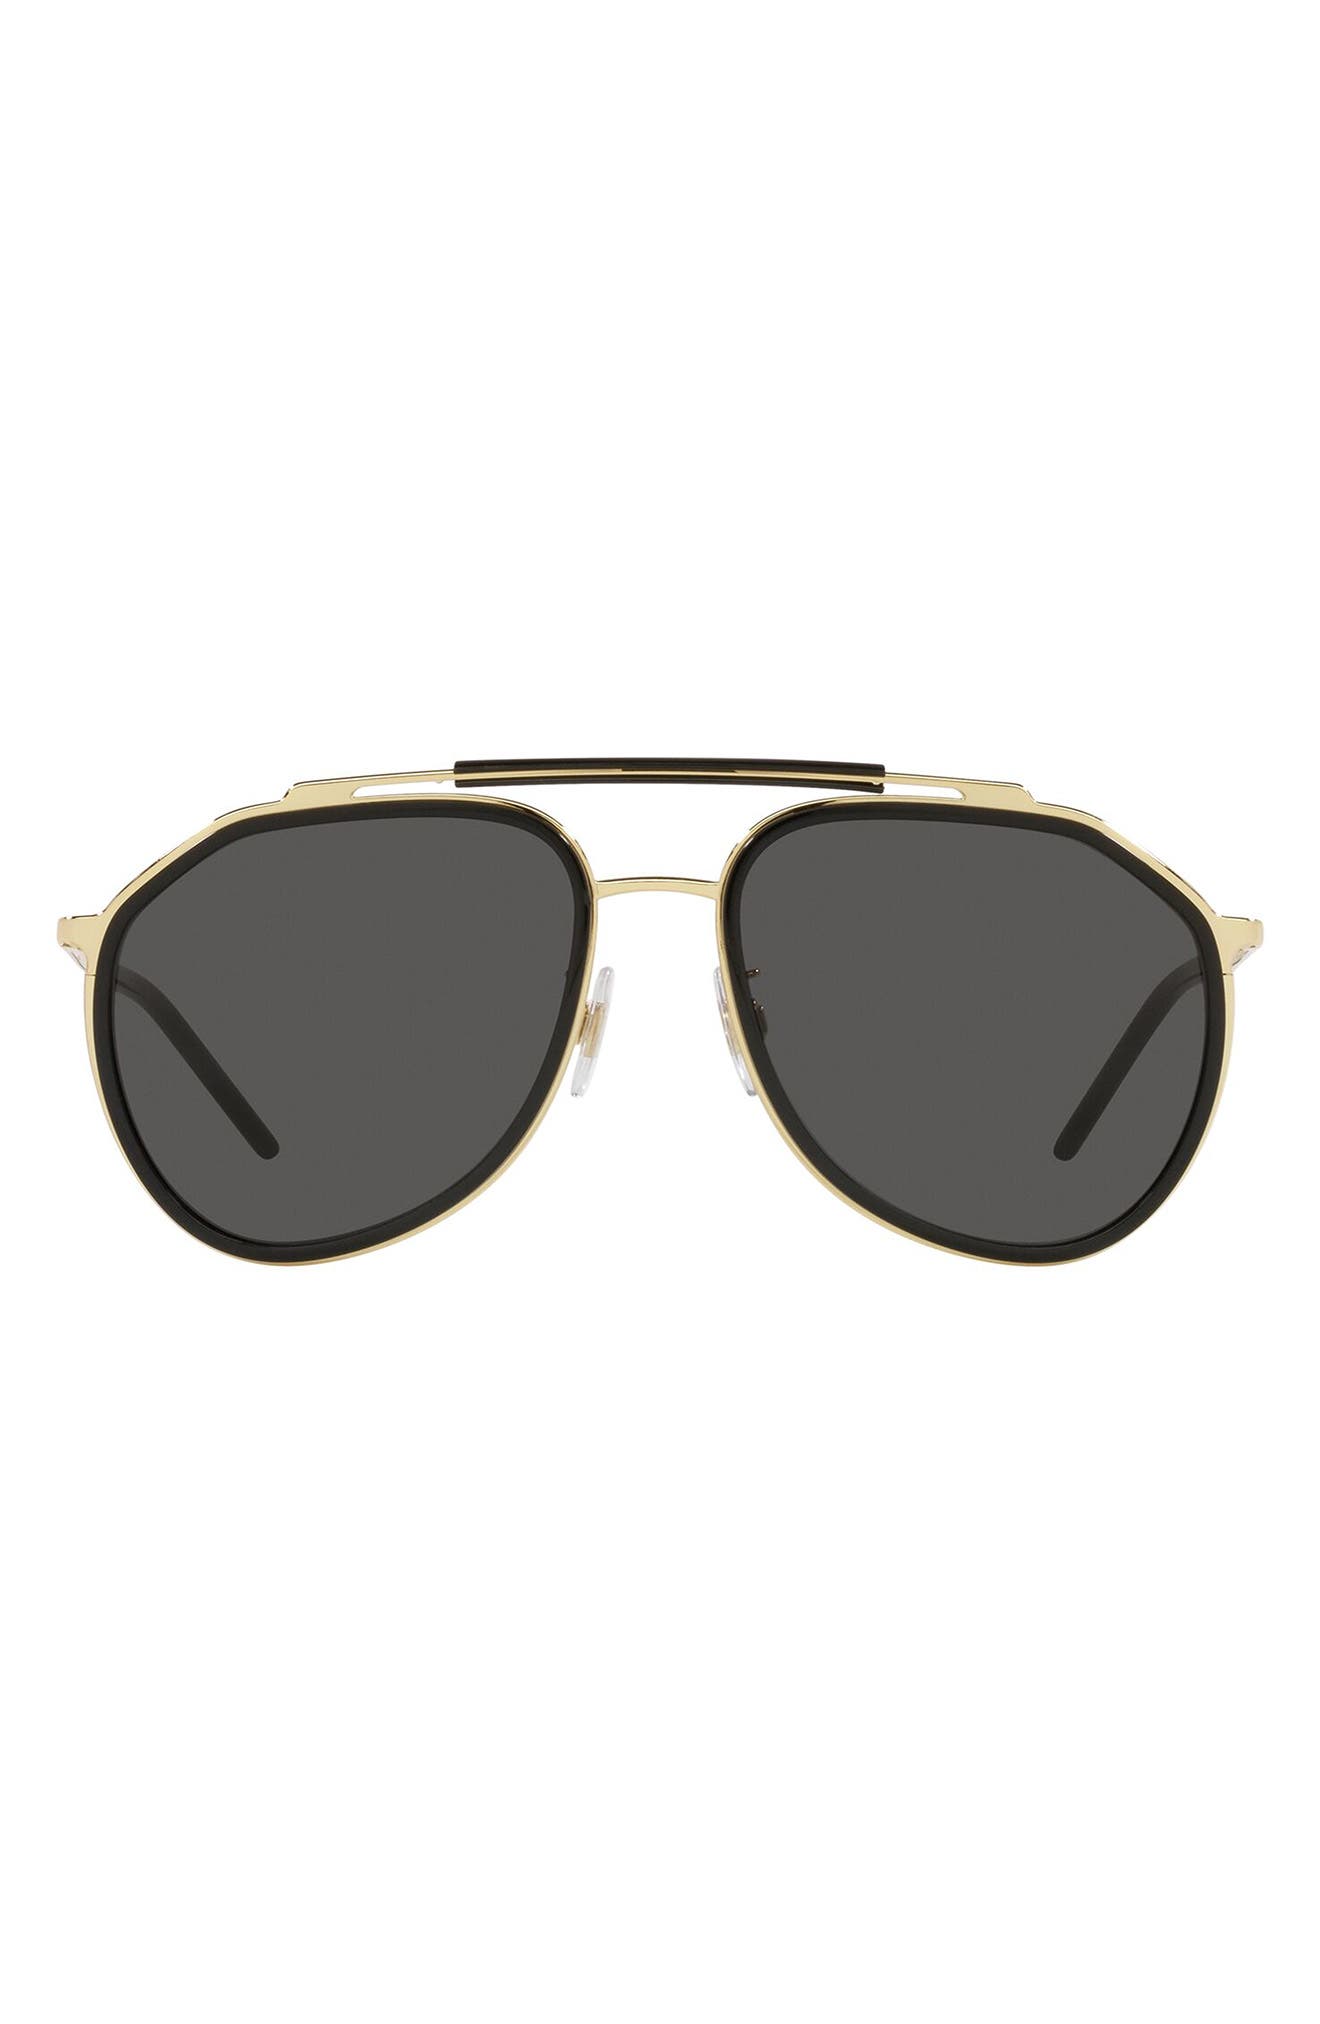 Dolce & Gabbana 57mm Aviator Sunglasses in Gold/Black/Dark Grey at Nordstrom